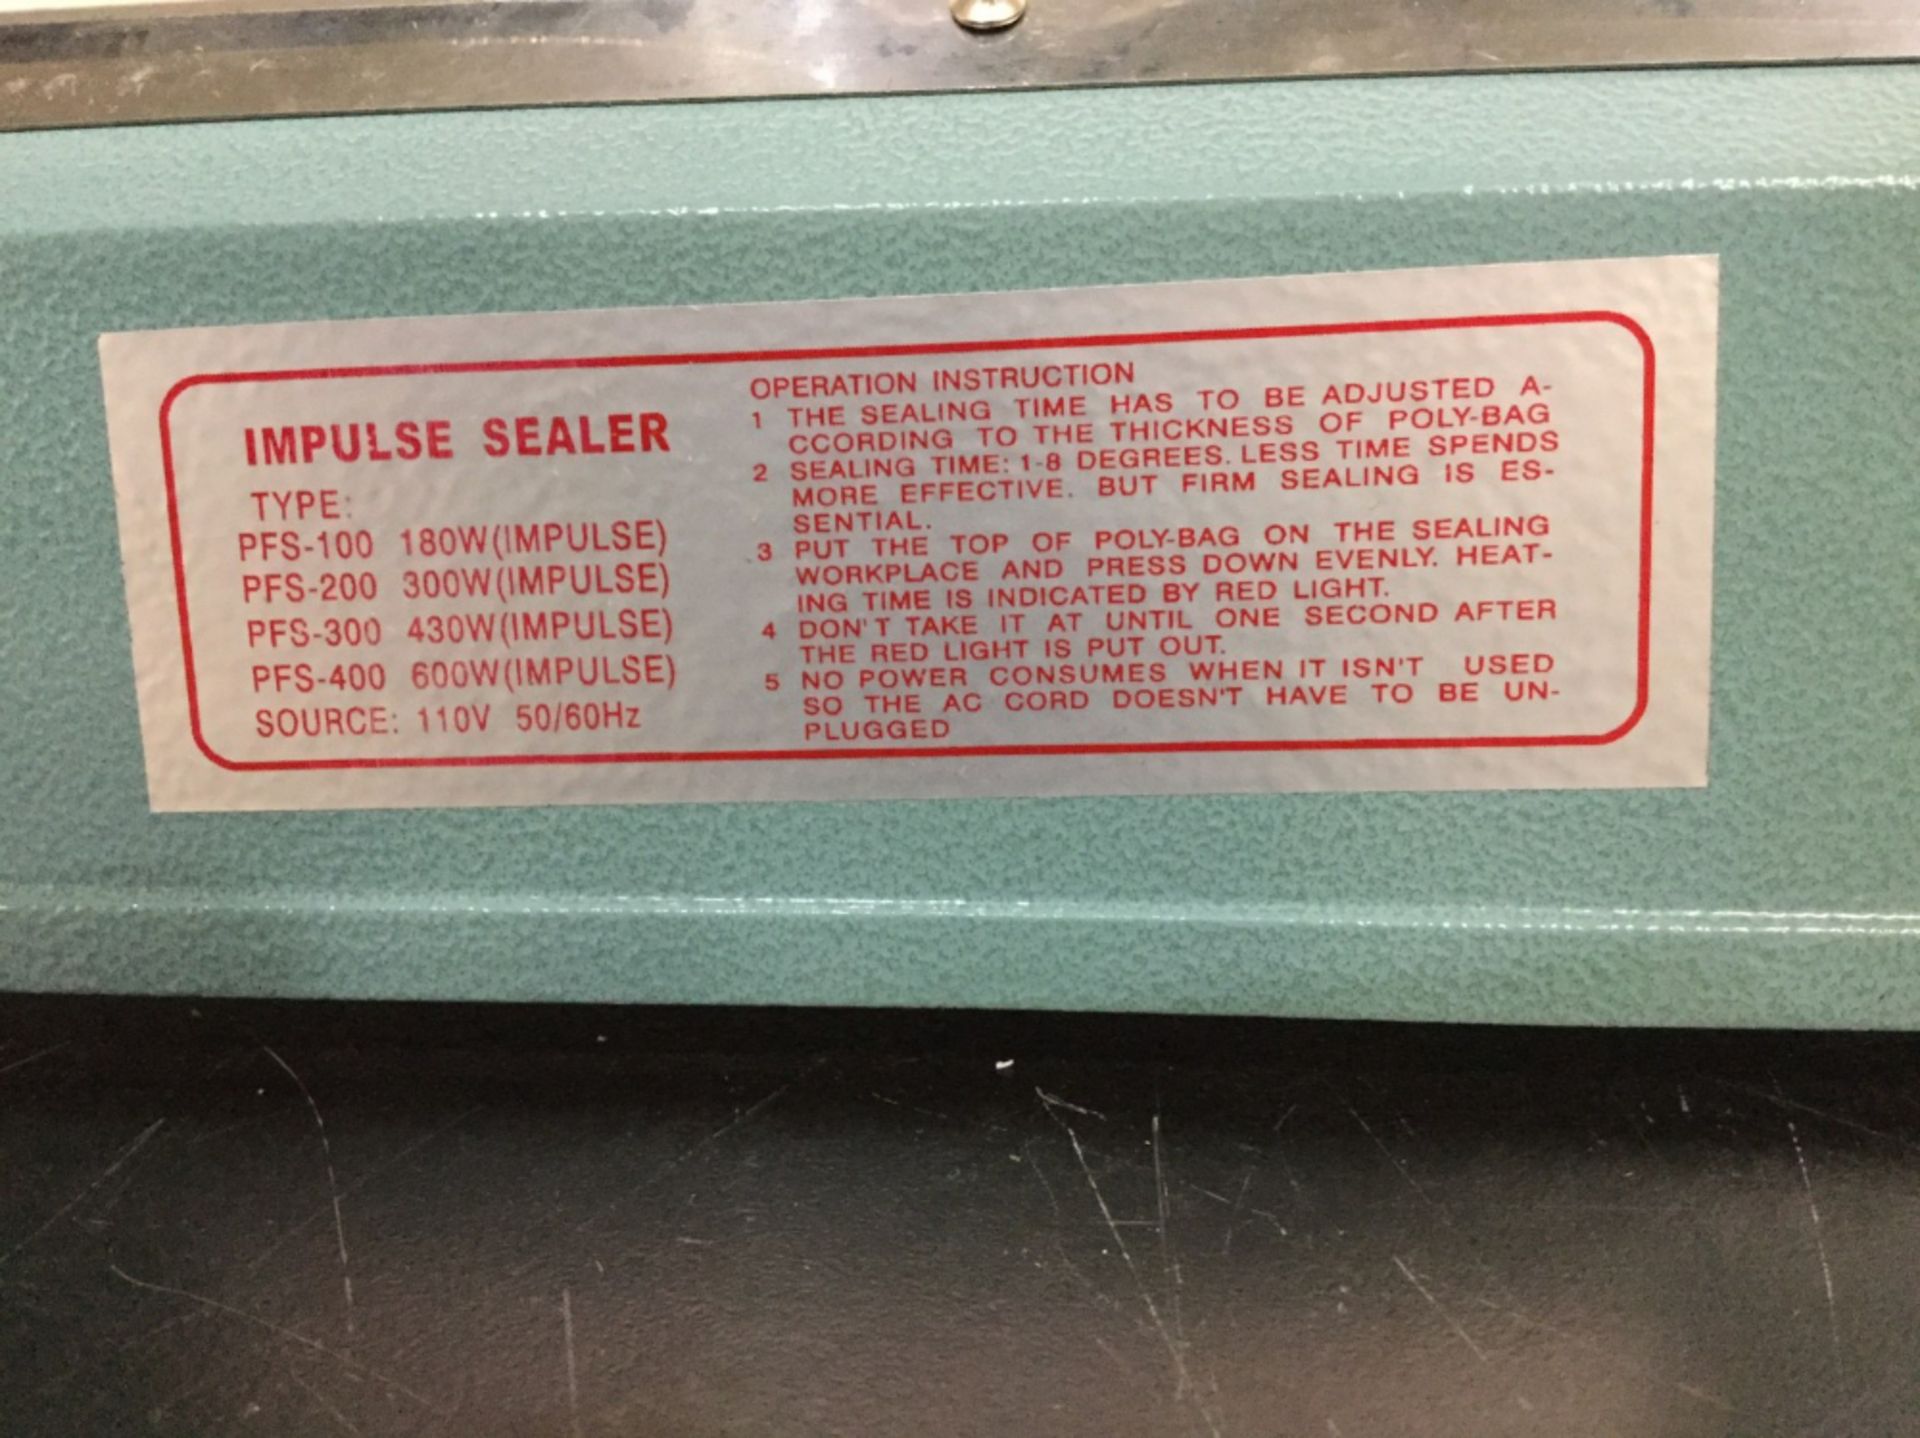 PFS-400 16" Hand Impulse Sealer - Image 2 of 3